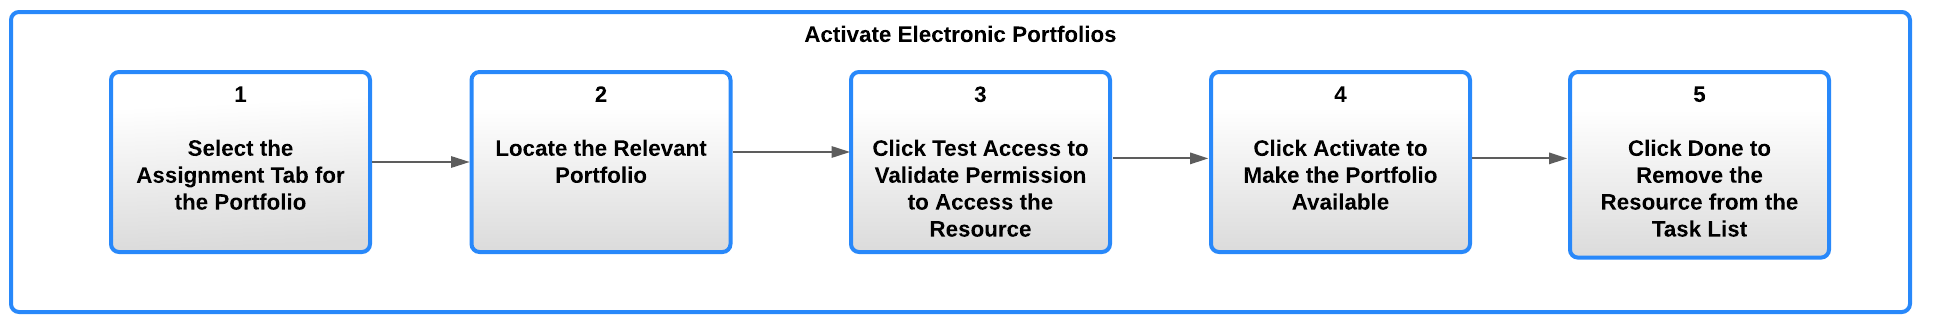 activate_electronic_portfolios.png